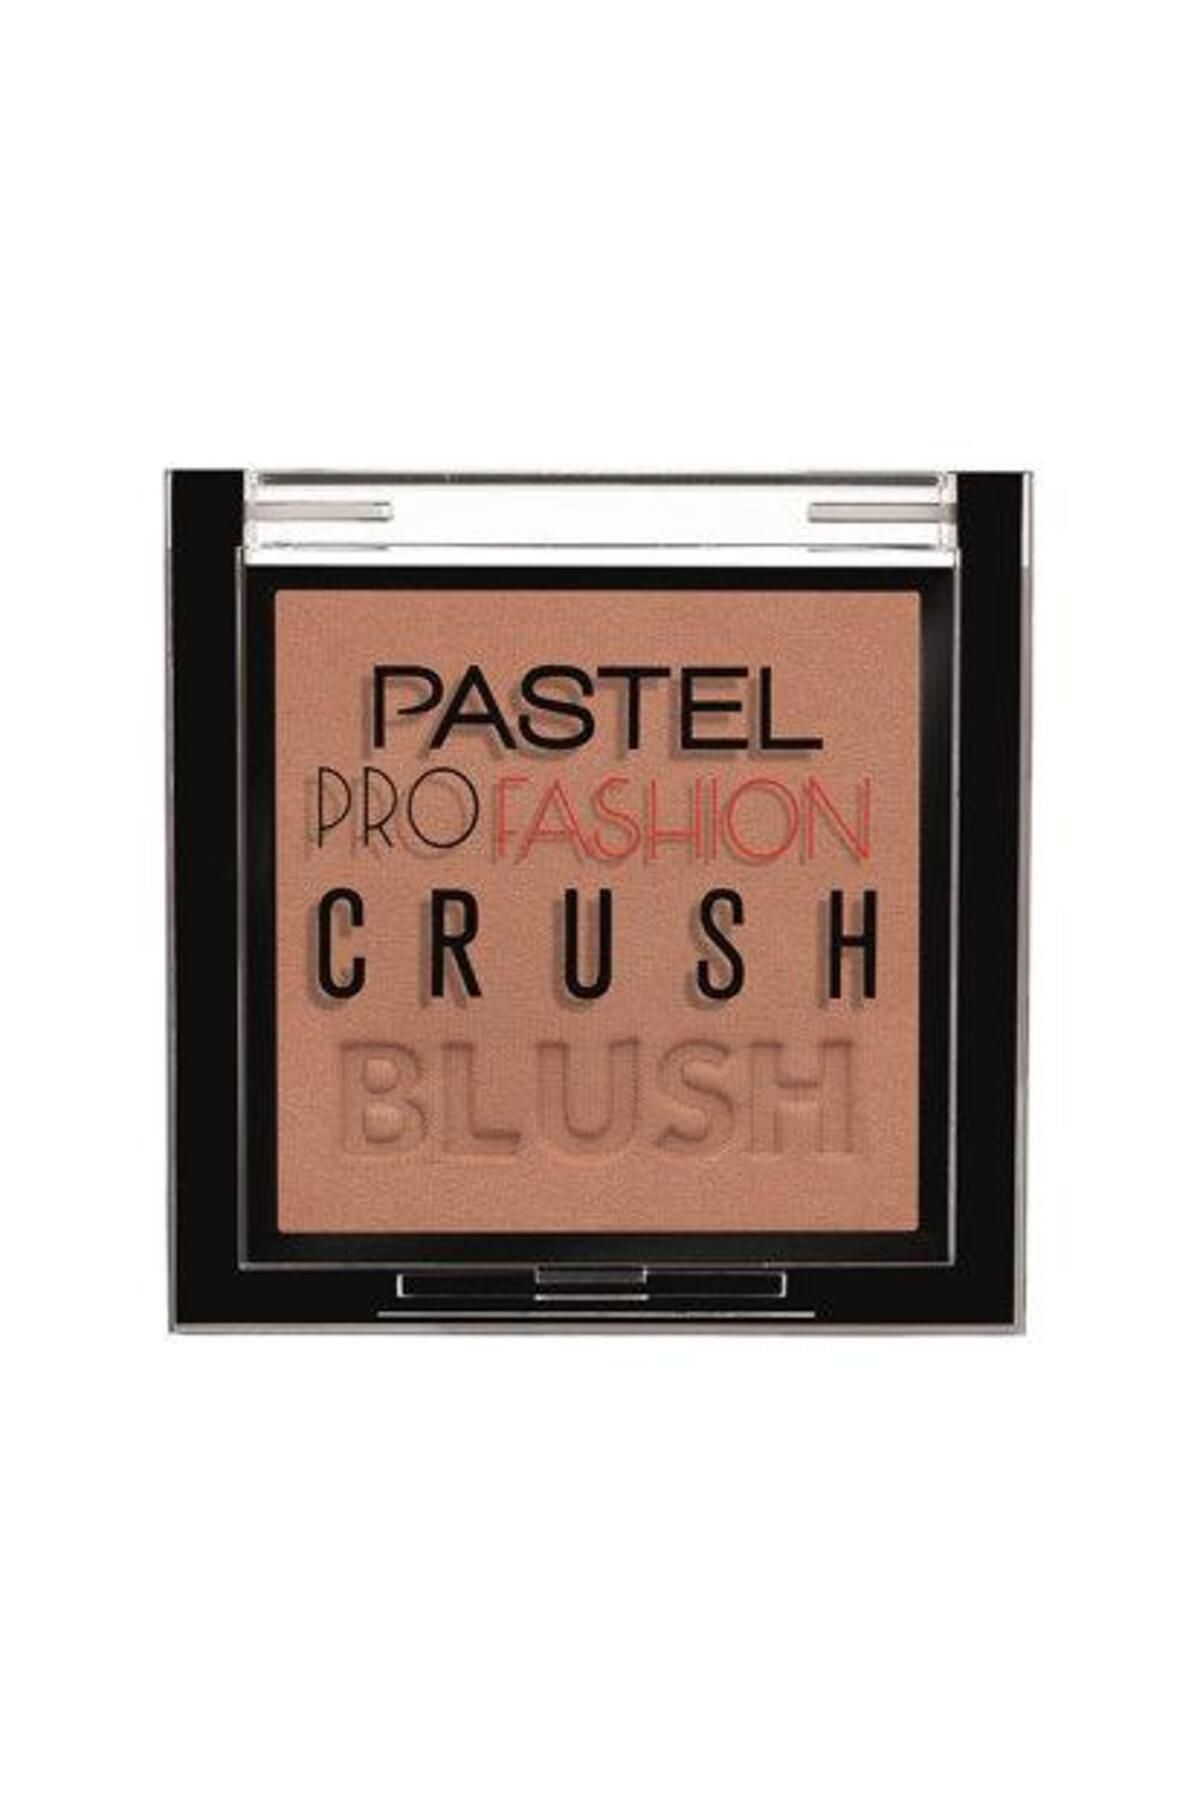 Pastel Profashion Crush Blush 305